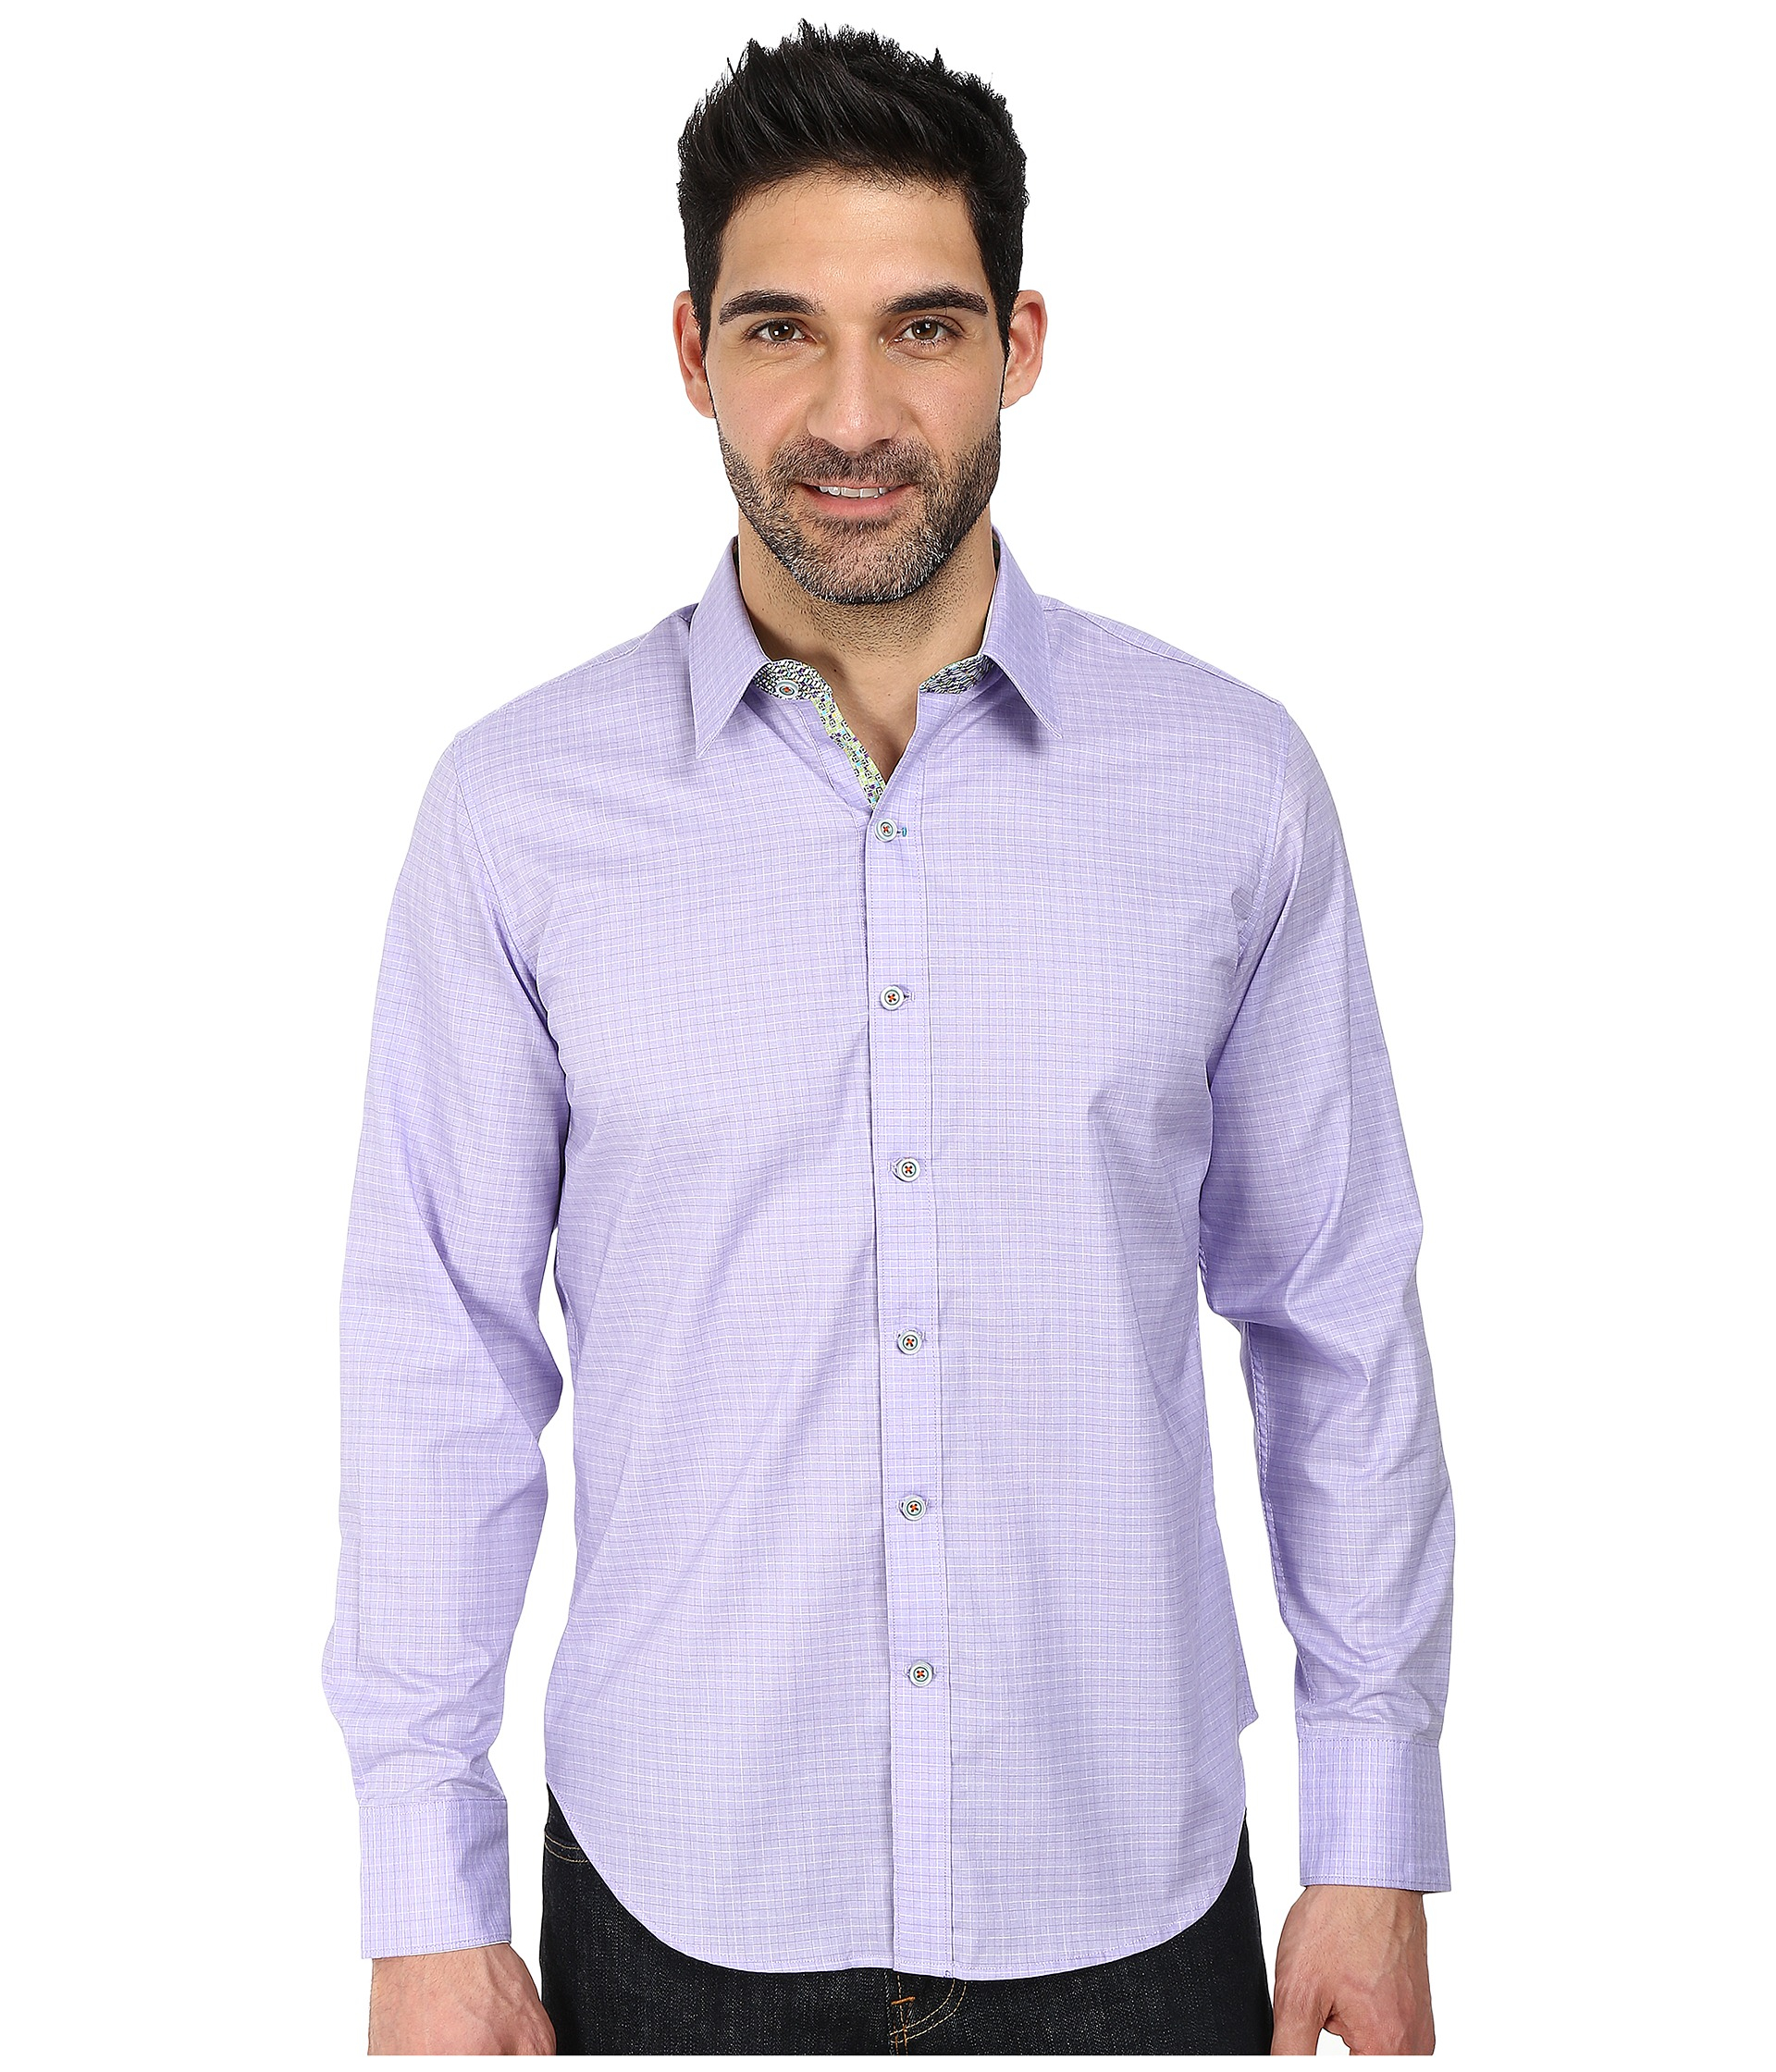 Lyst - Robert graham Greymouth Long Sleeve Woven Shirt in Purple for Men